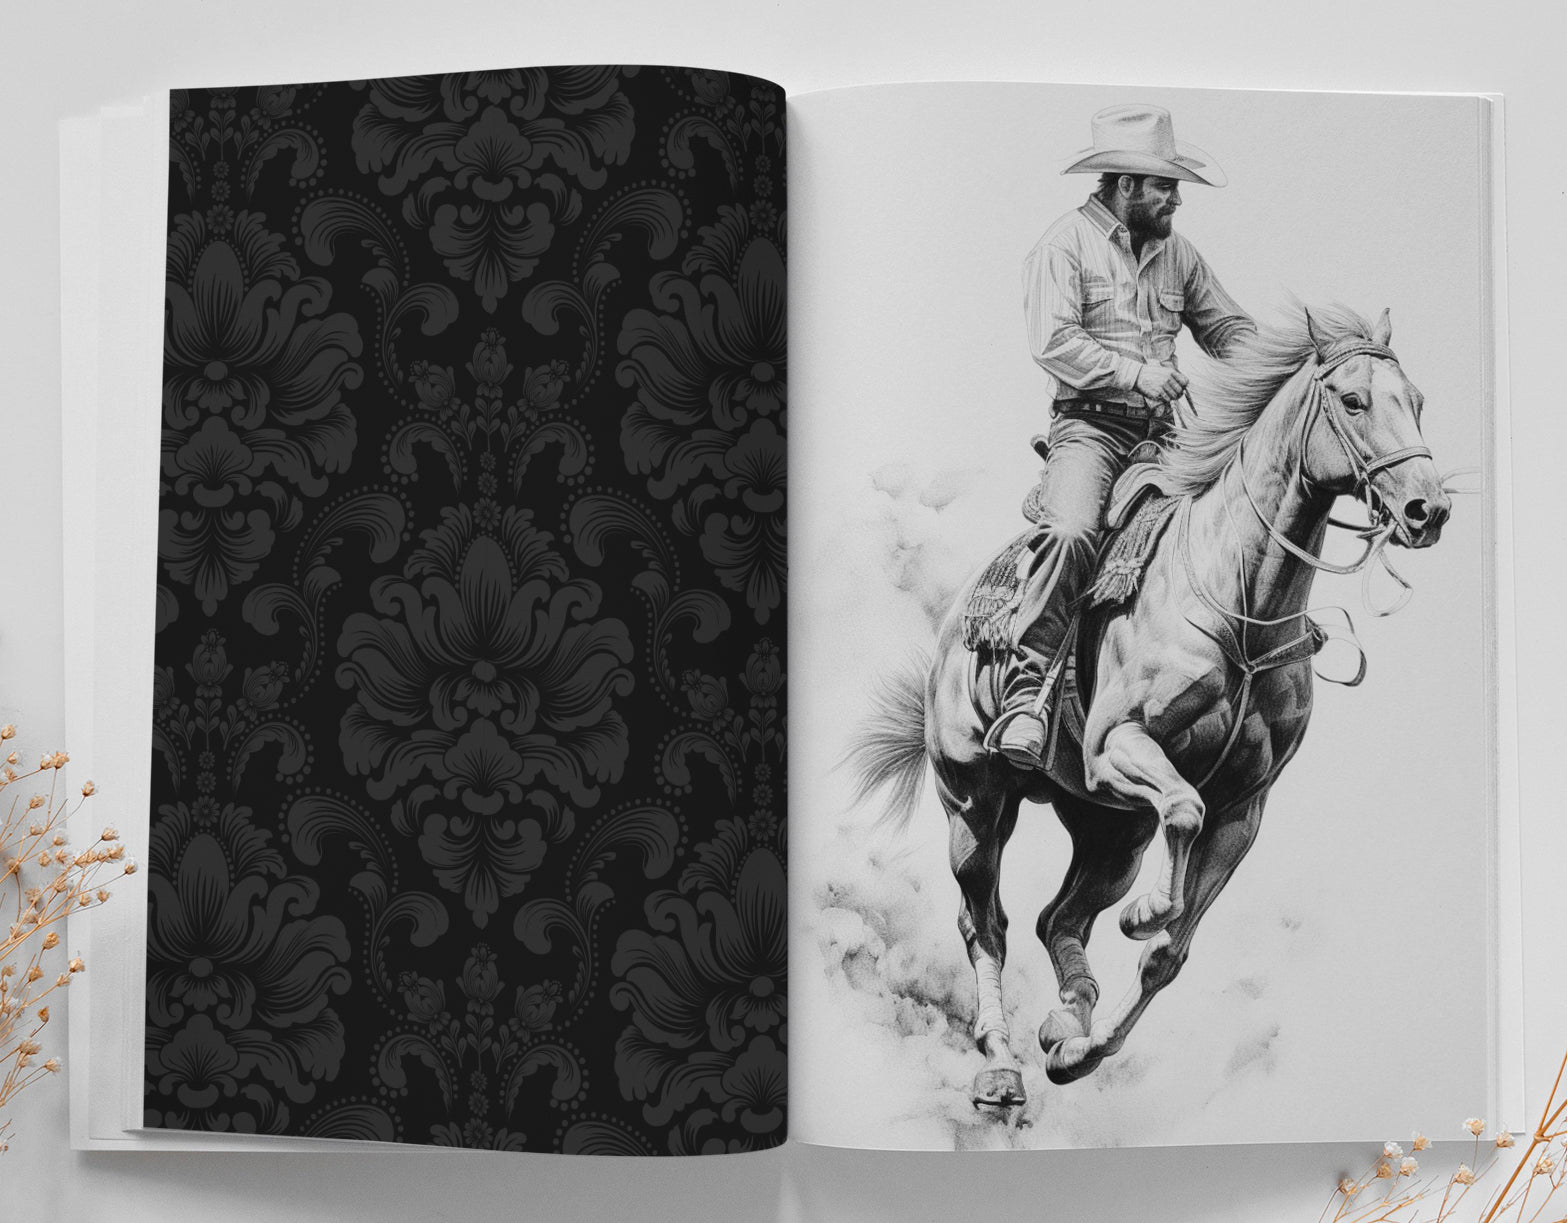 We love Cowboys Coloring Book (Printbook) - Monsoon Publishing USA